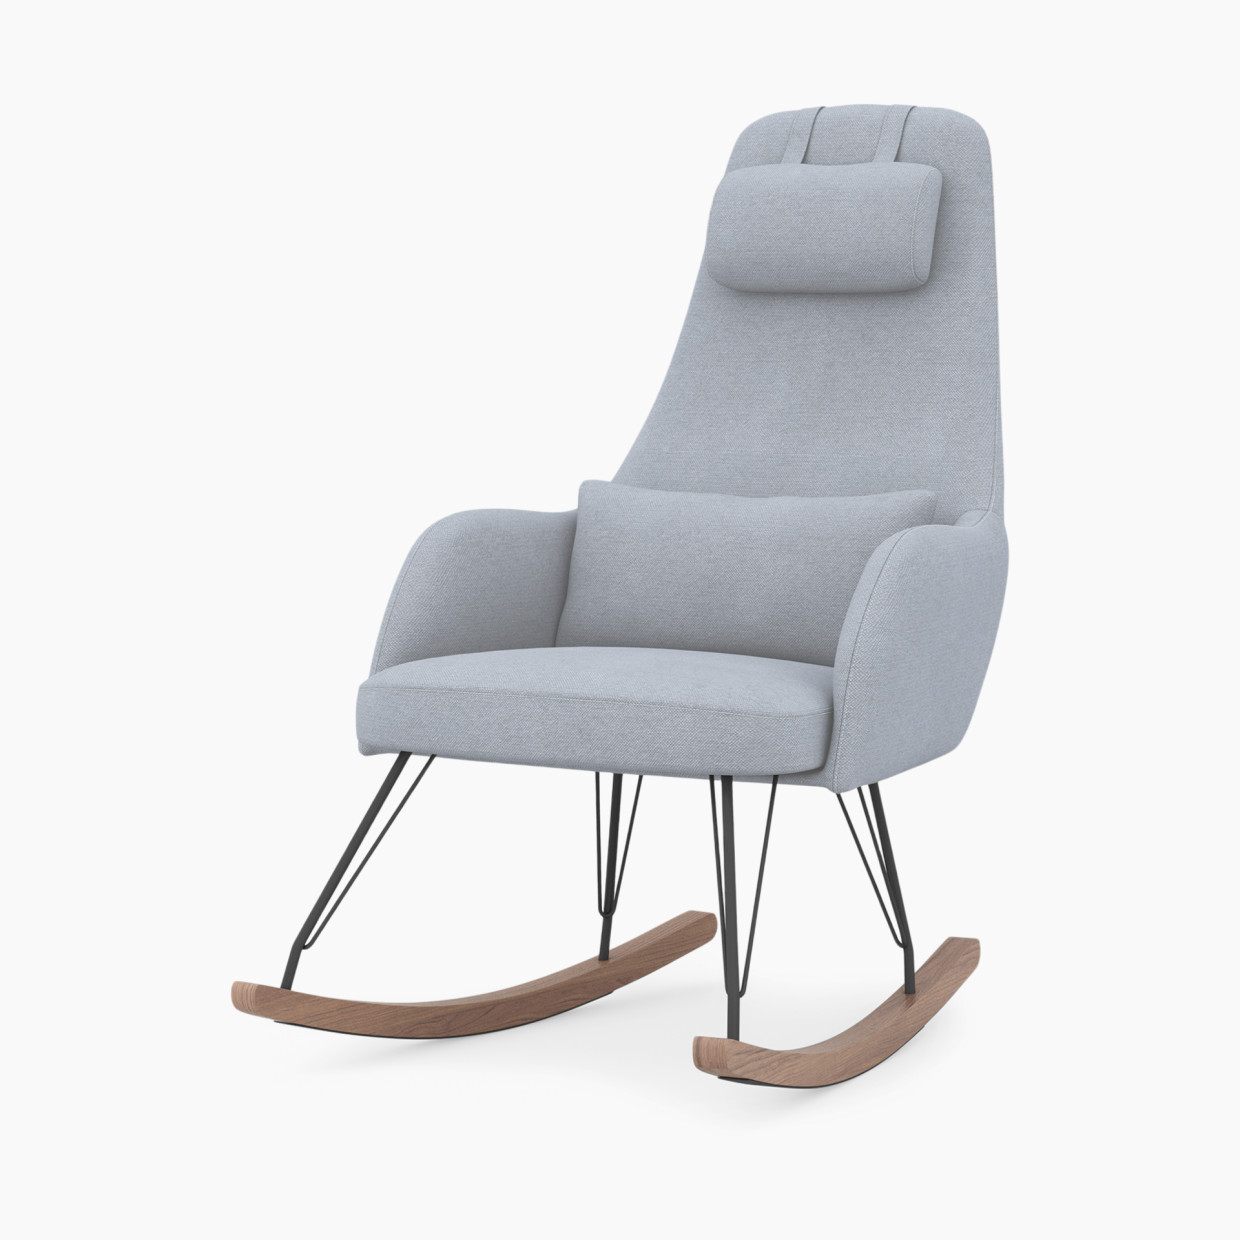 dadada Weeble Rocking Chair - Light Gray.